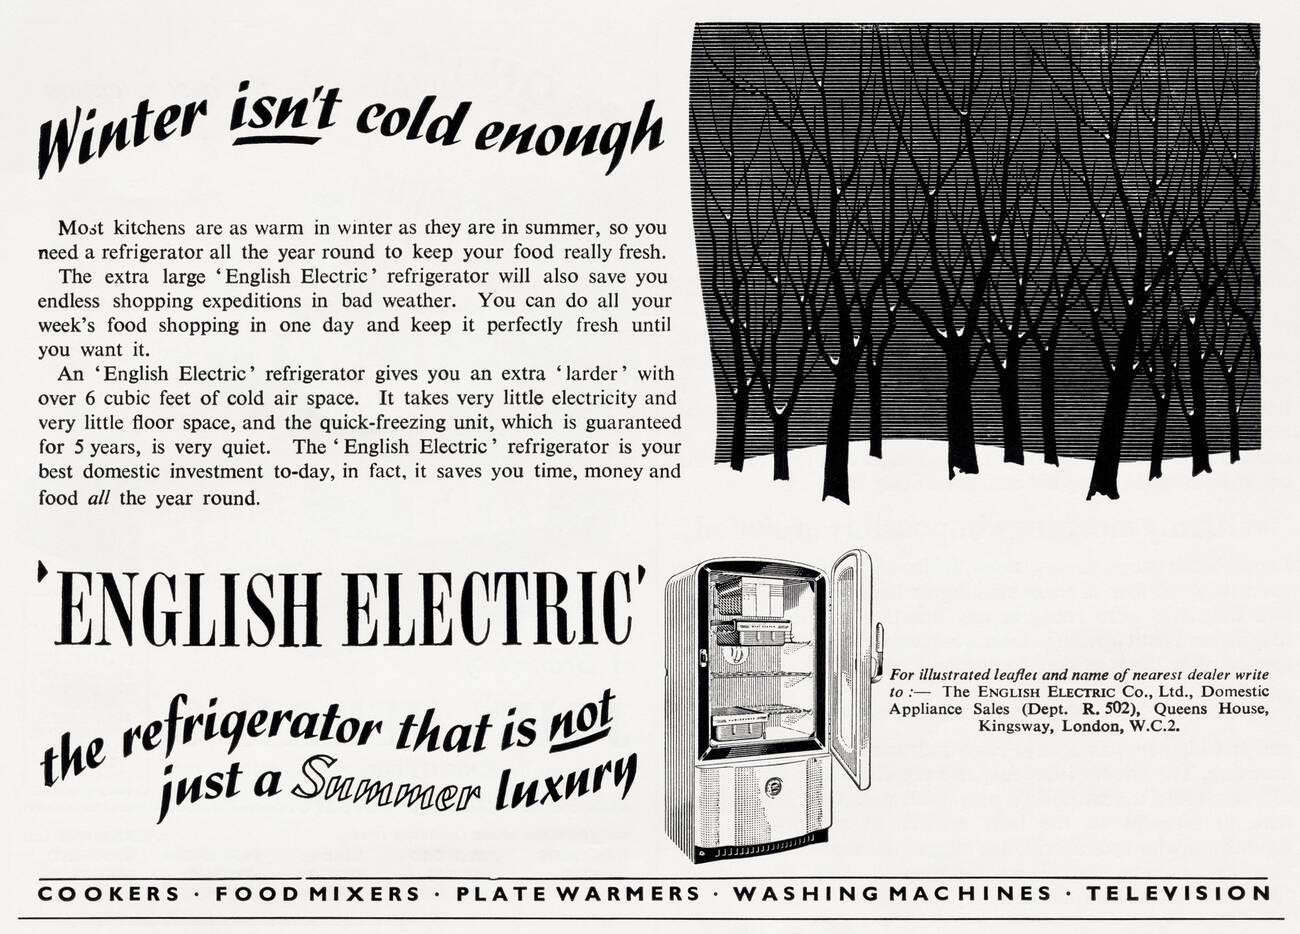 English Electric refrigerator ad, circa 1950.